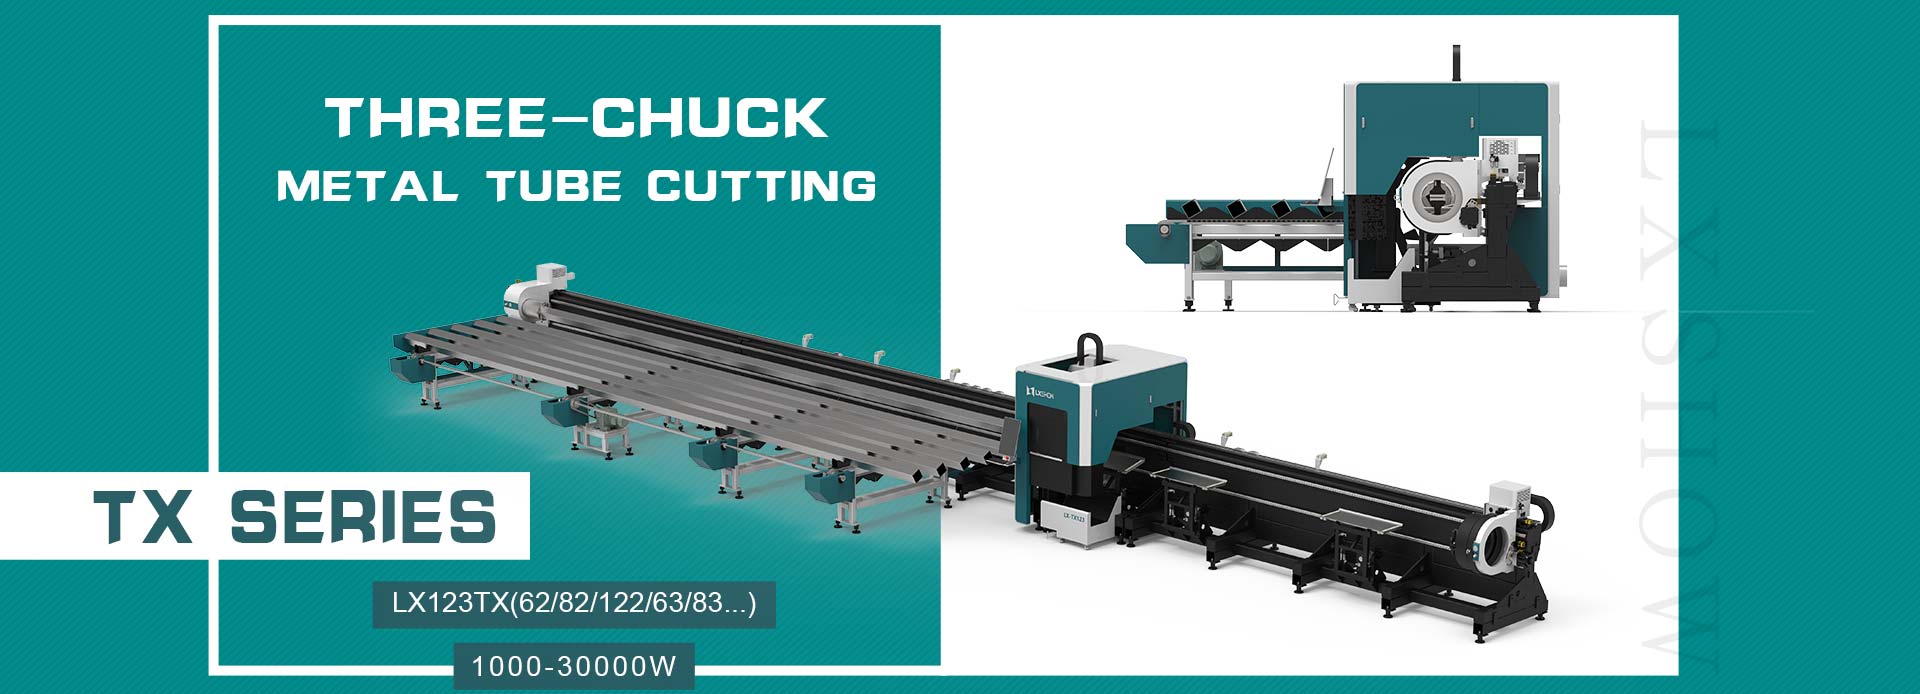 LX123TX Best Three Chuck Heavy-duty Fiber Laser Metal Tube Cutting Machine